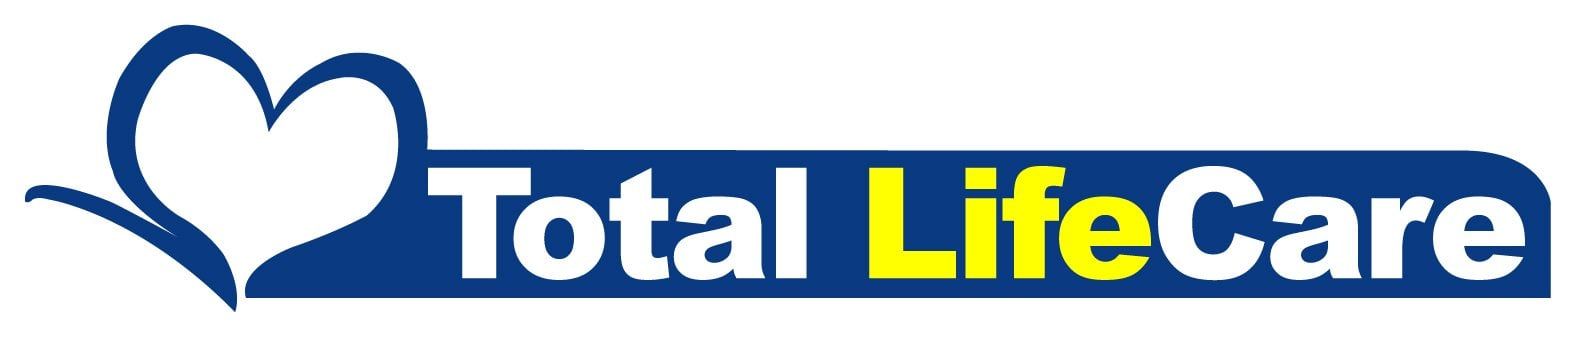 Total LifeCare Inc logo